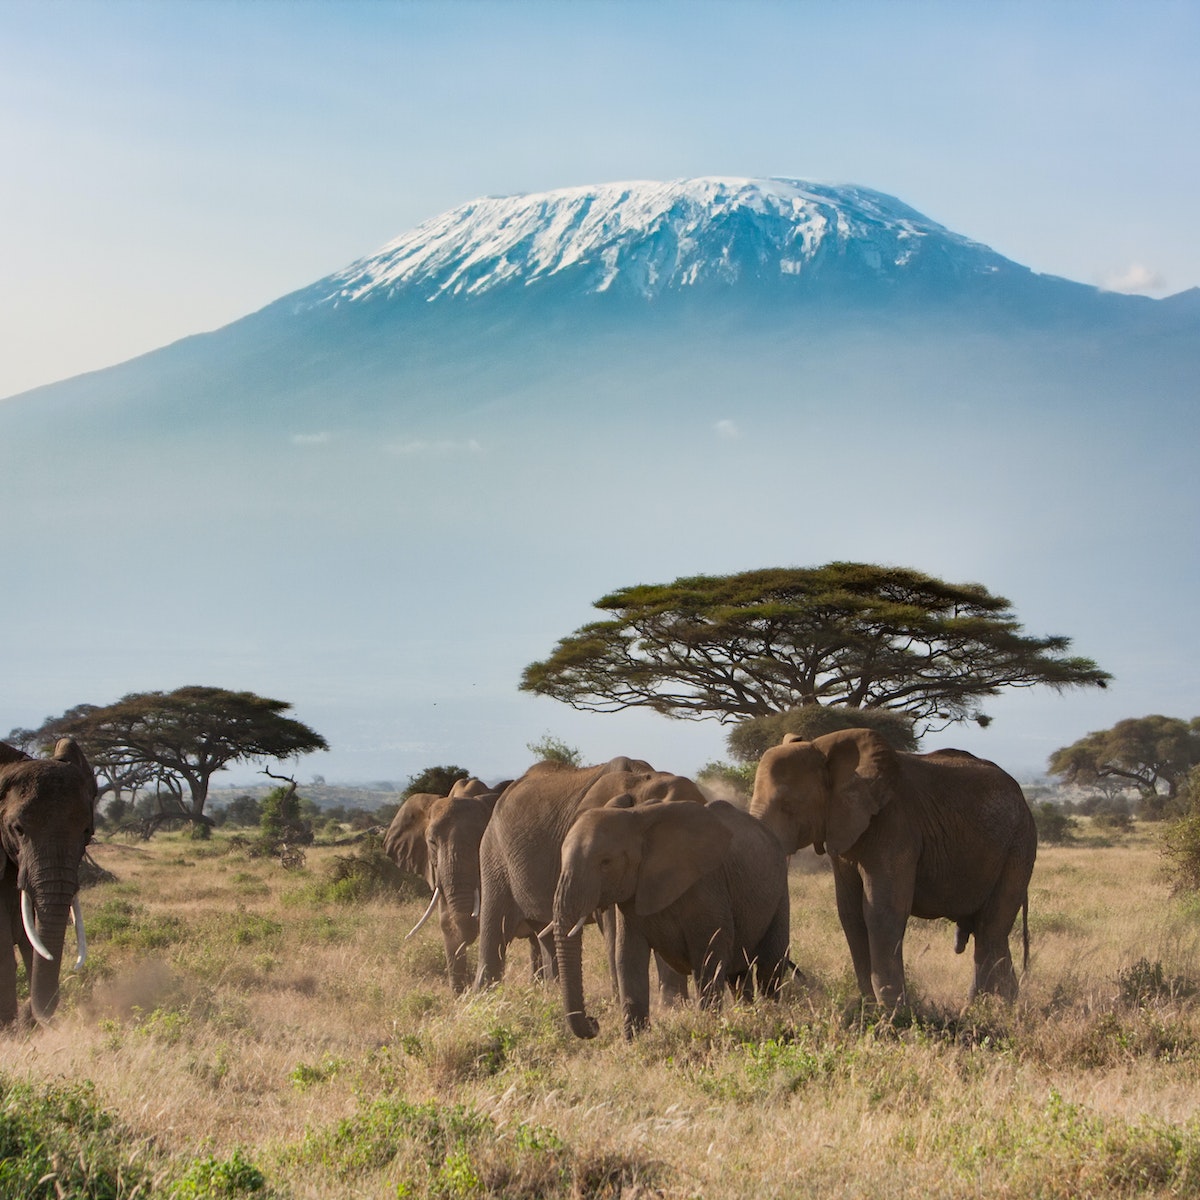 Mt. Kilimanjaro from Amboseli National Park.